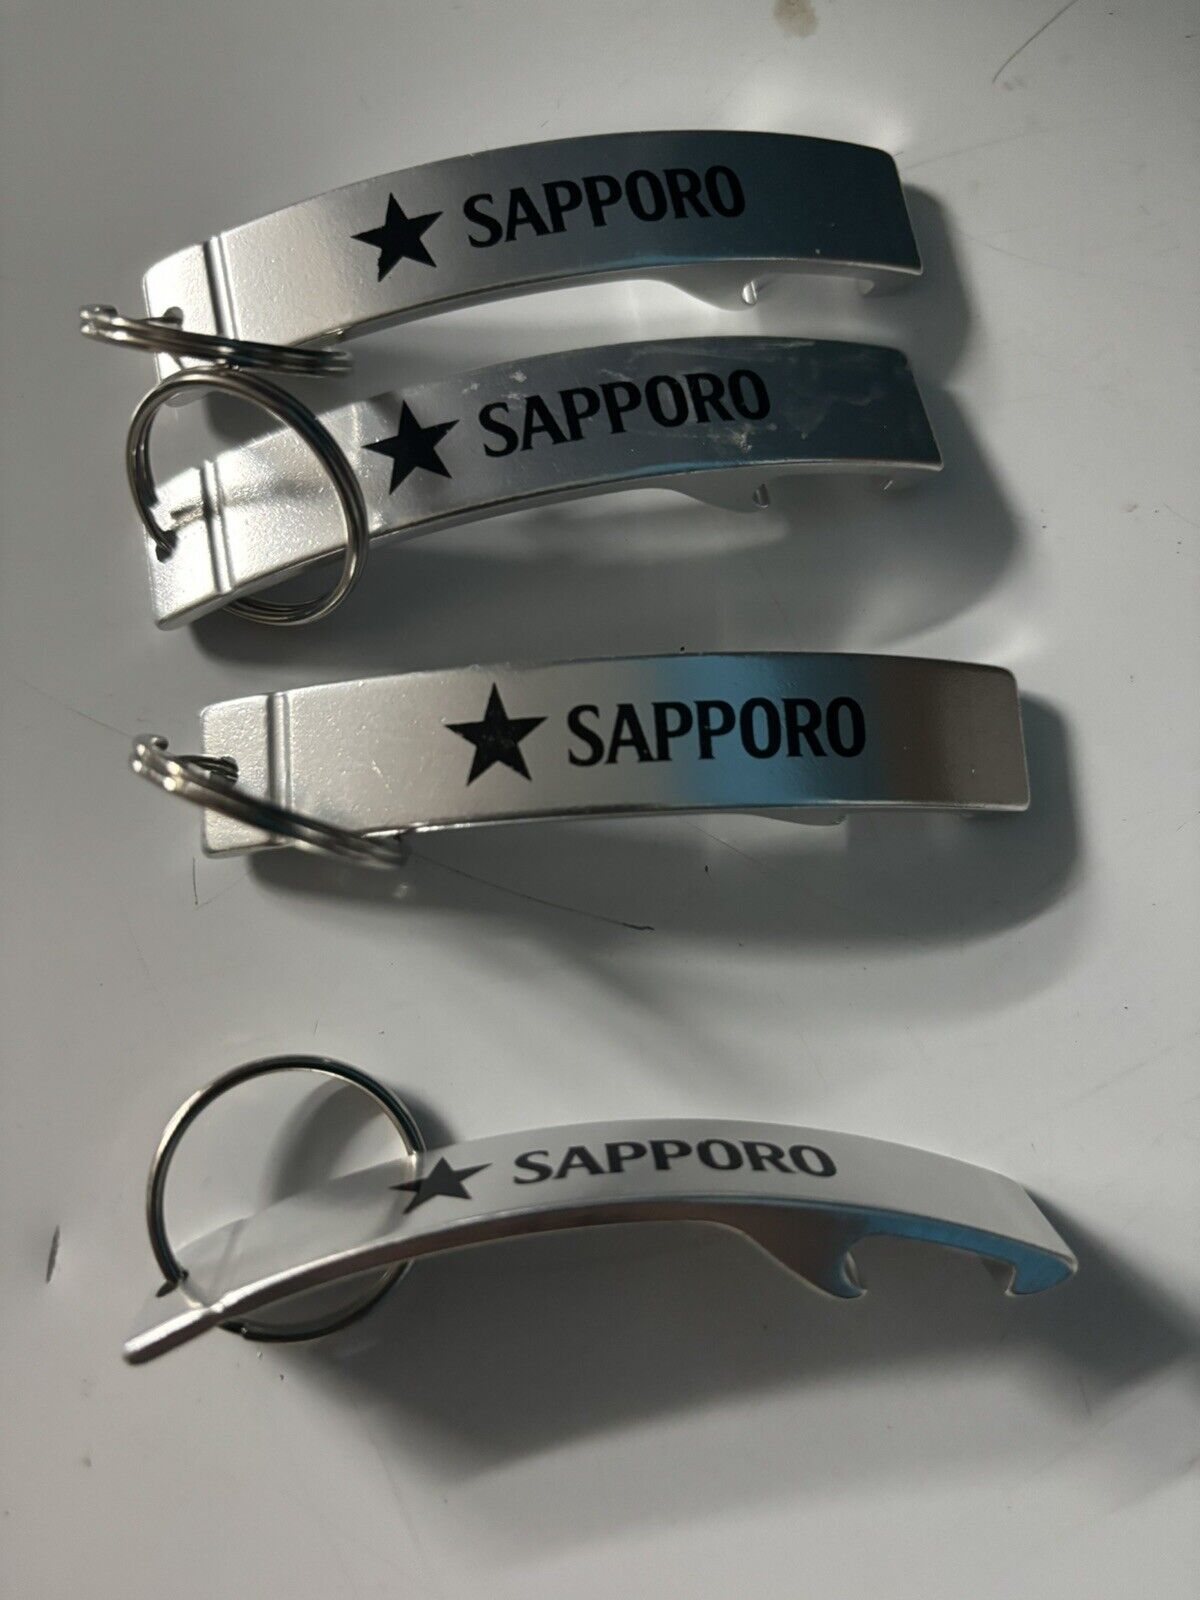 Sapporo Beer Keychain Bottle Openers Lot (x4).  